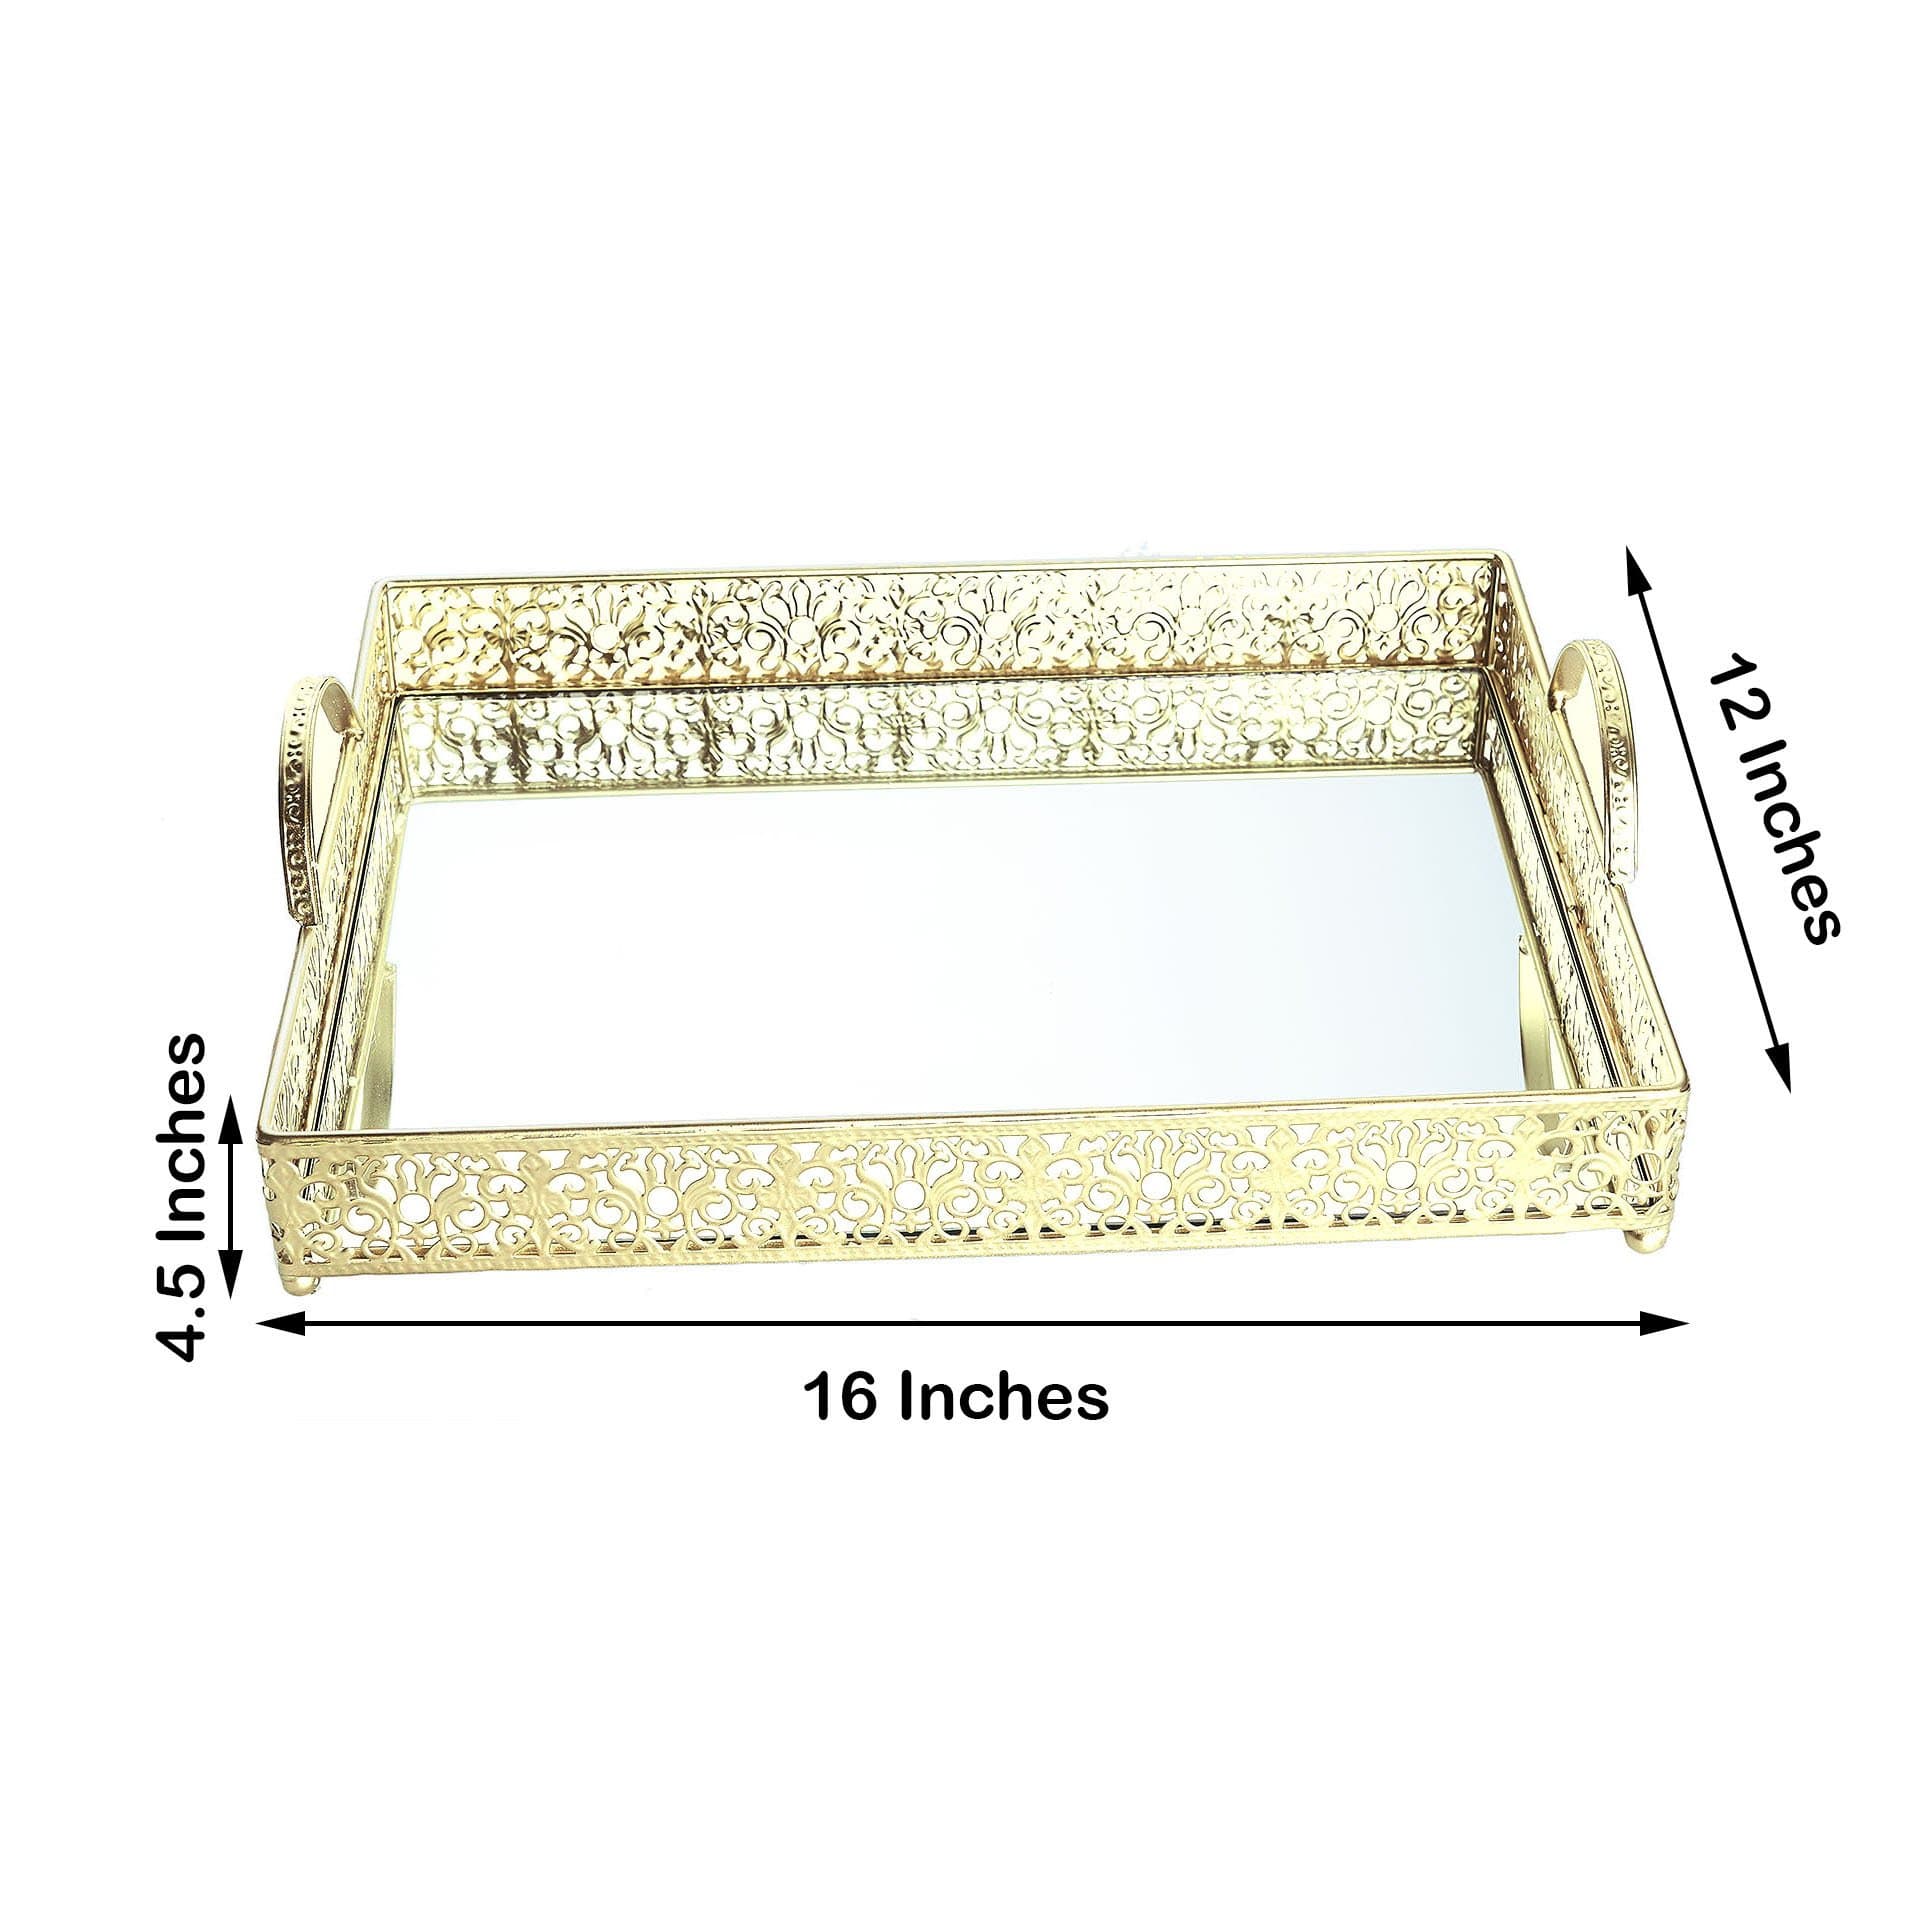 16x12 in Metal Rectangle Fleur De Lis Trim Decorative Mirror Serving Tray